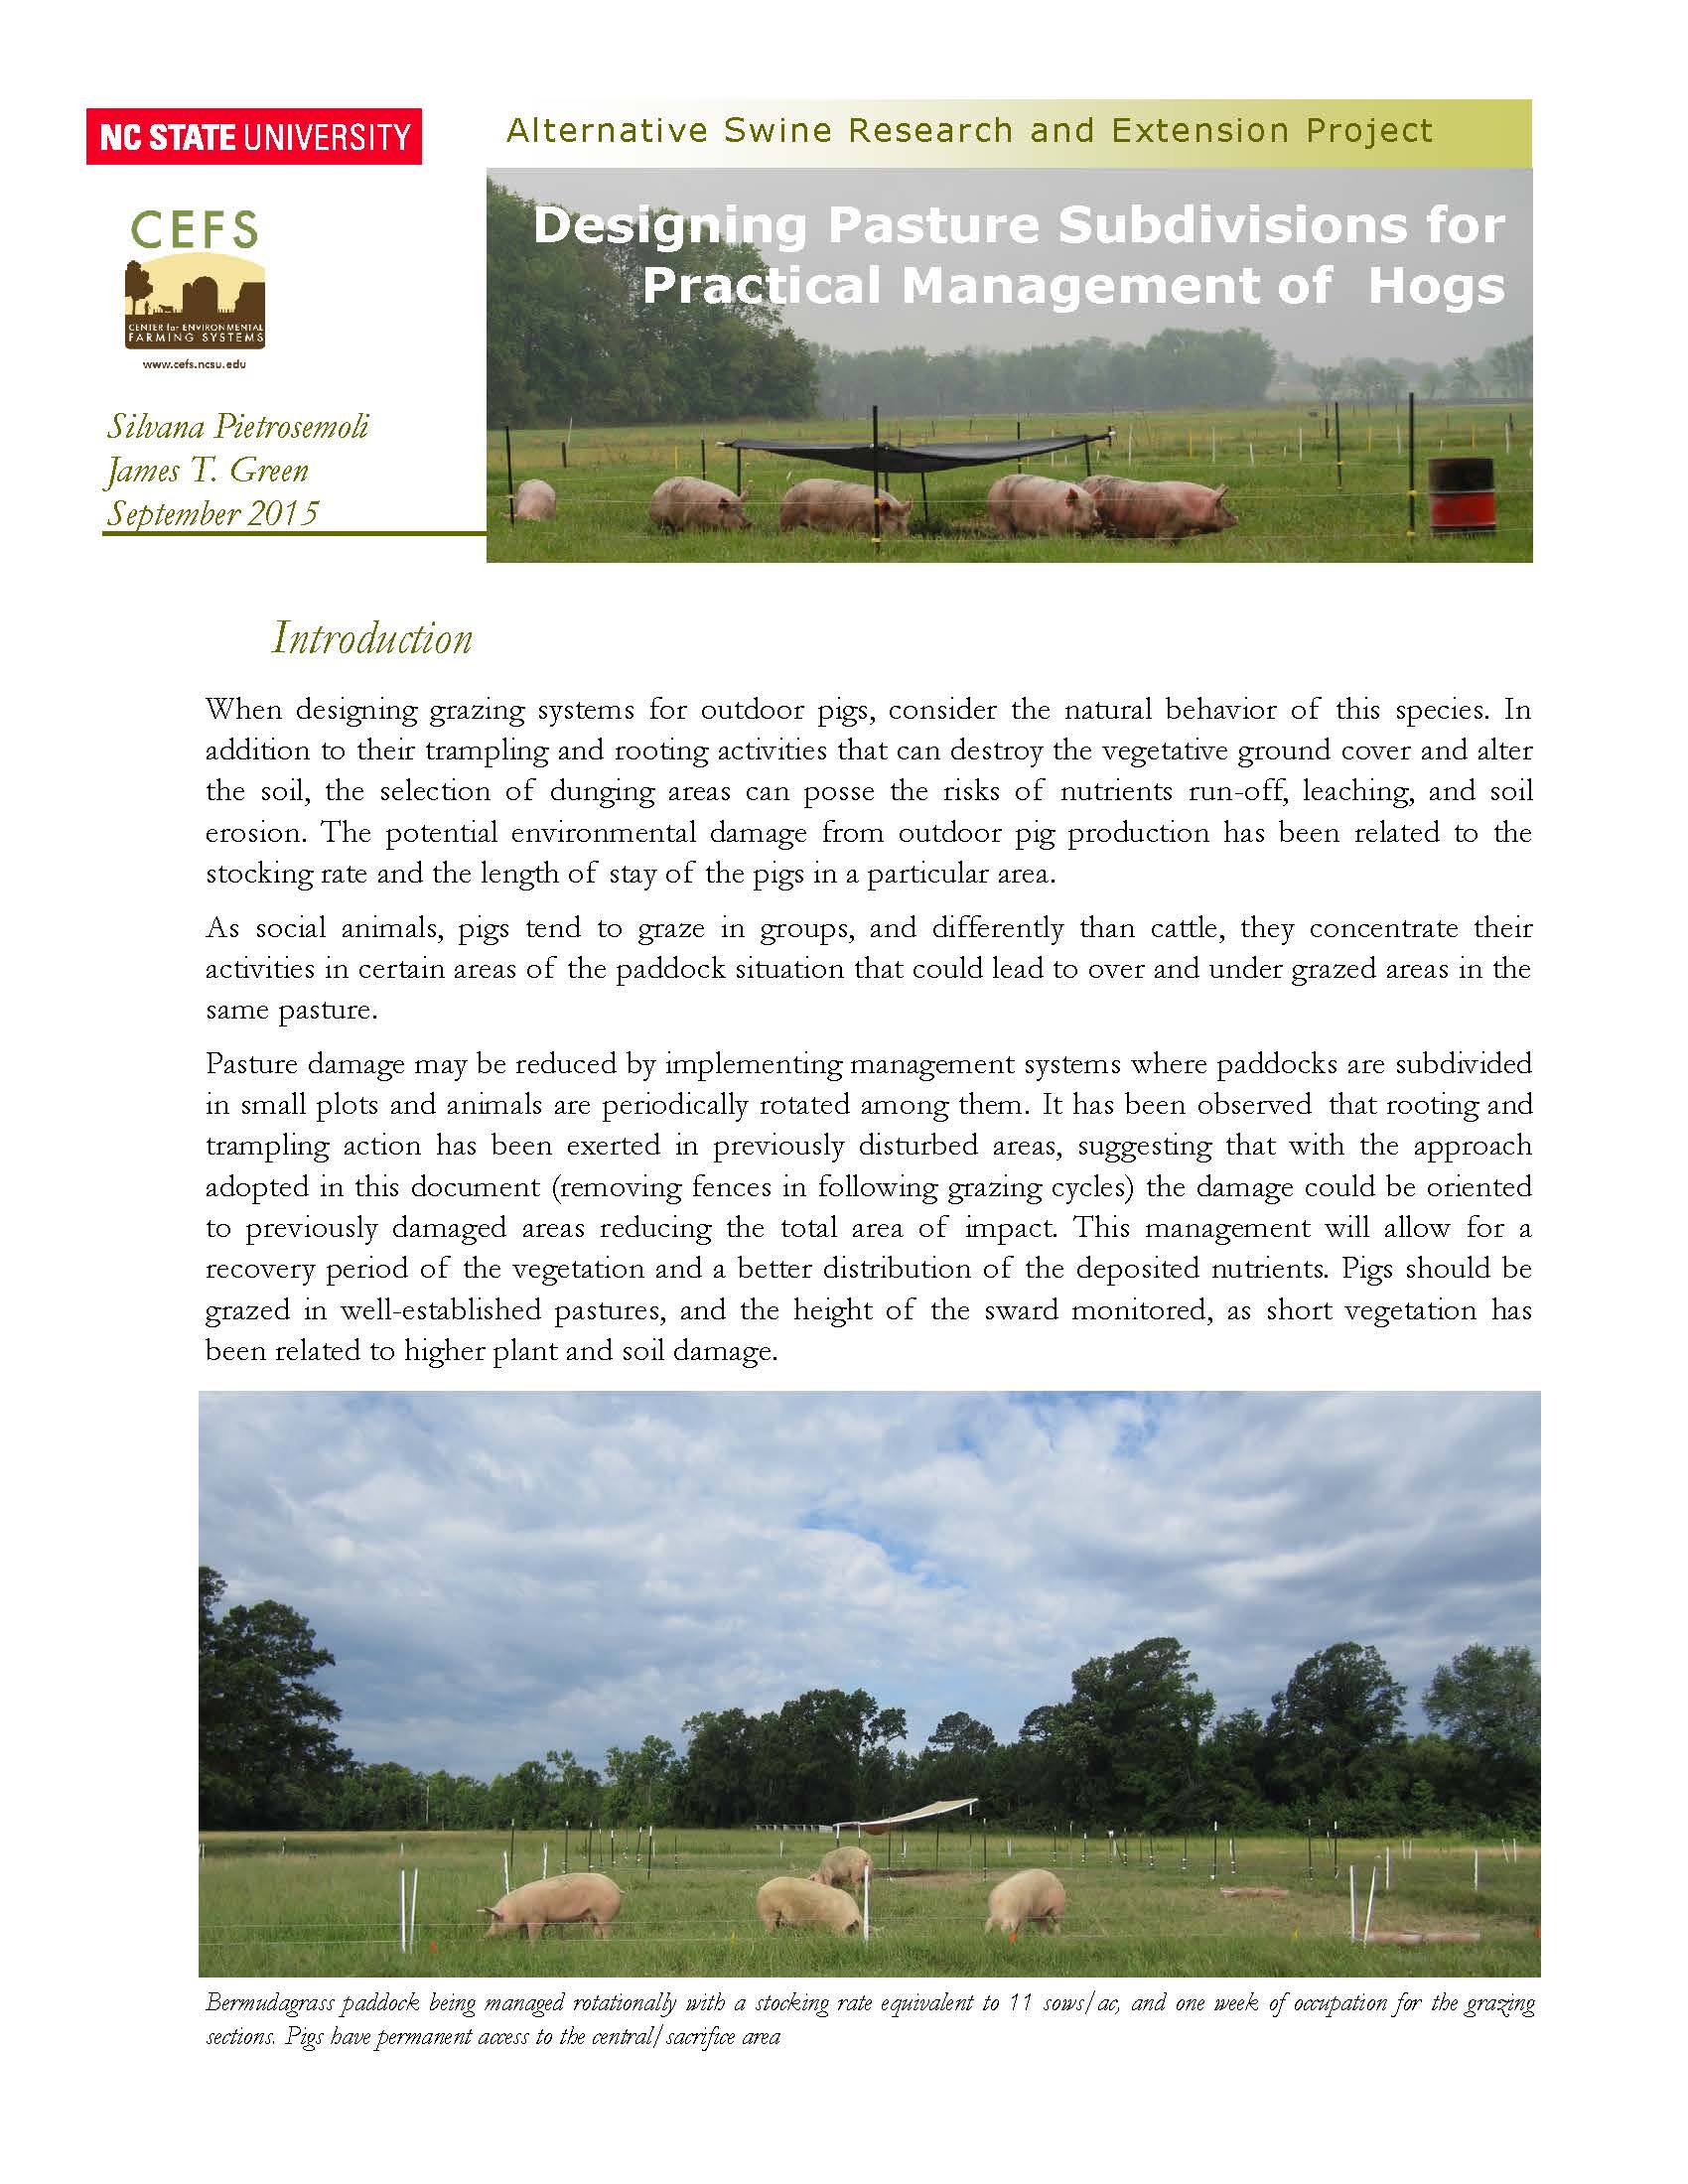 Designing pasture subdivisions for practical management of hogs